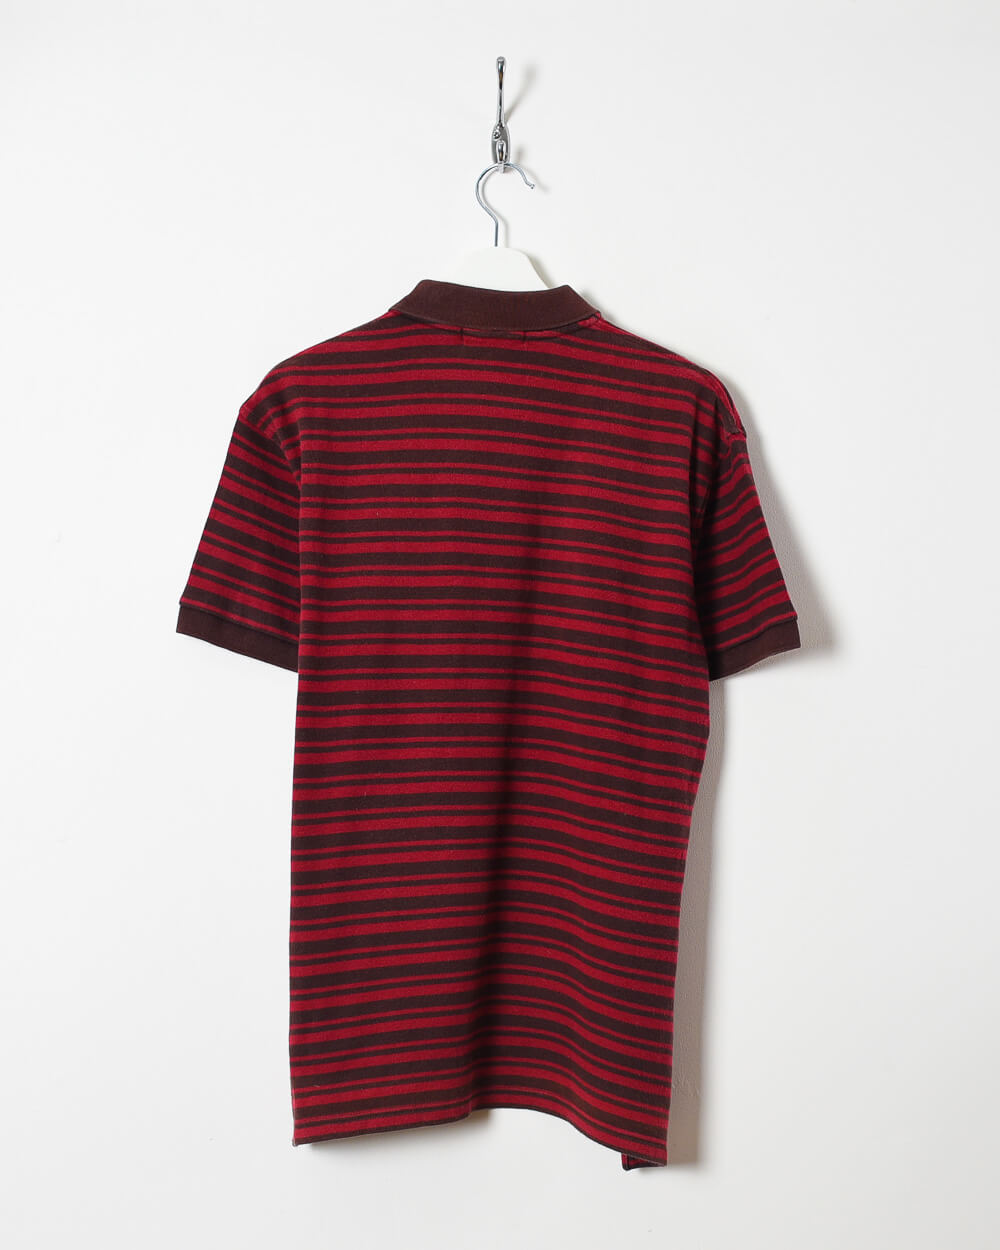 Maroon Yves Saint Laurent Polo Shirt - Medium